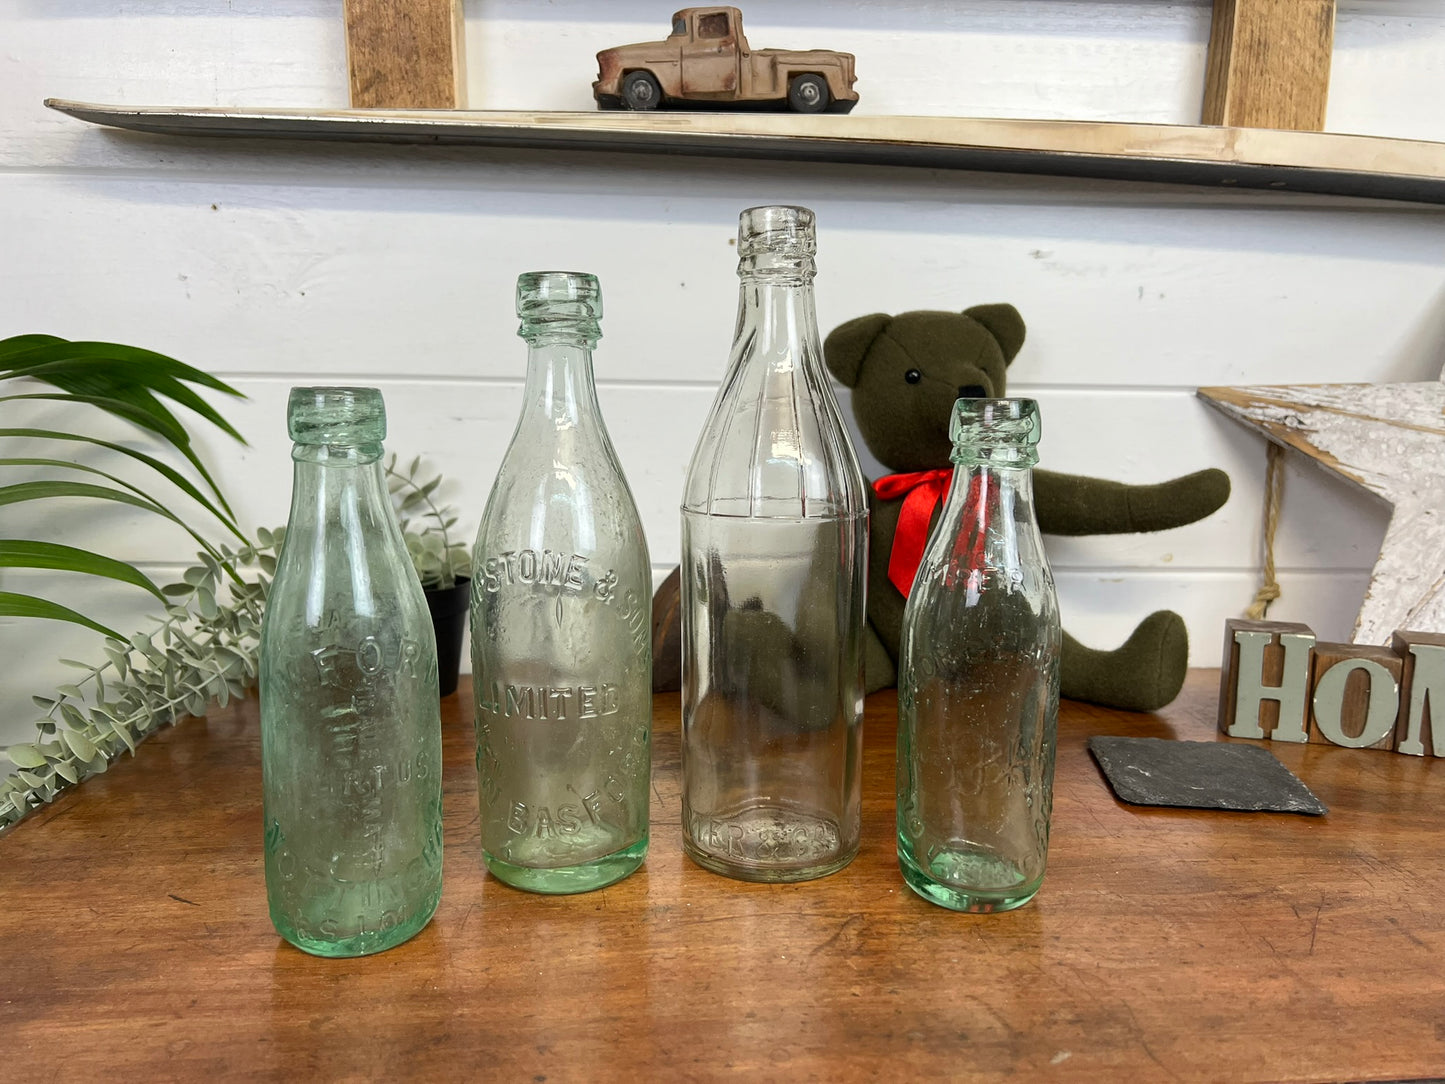 4x Vintage Clear Glass Bottles Home Decor Rustic Industrial Shelf Decor Display